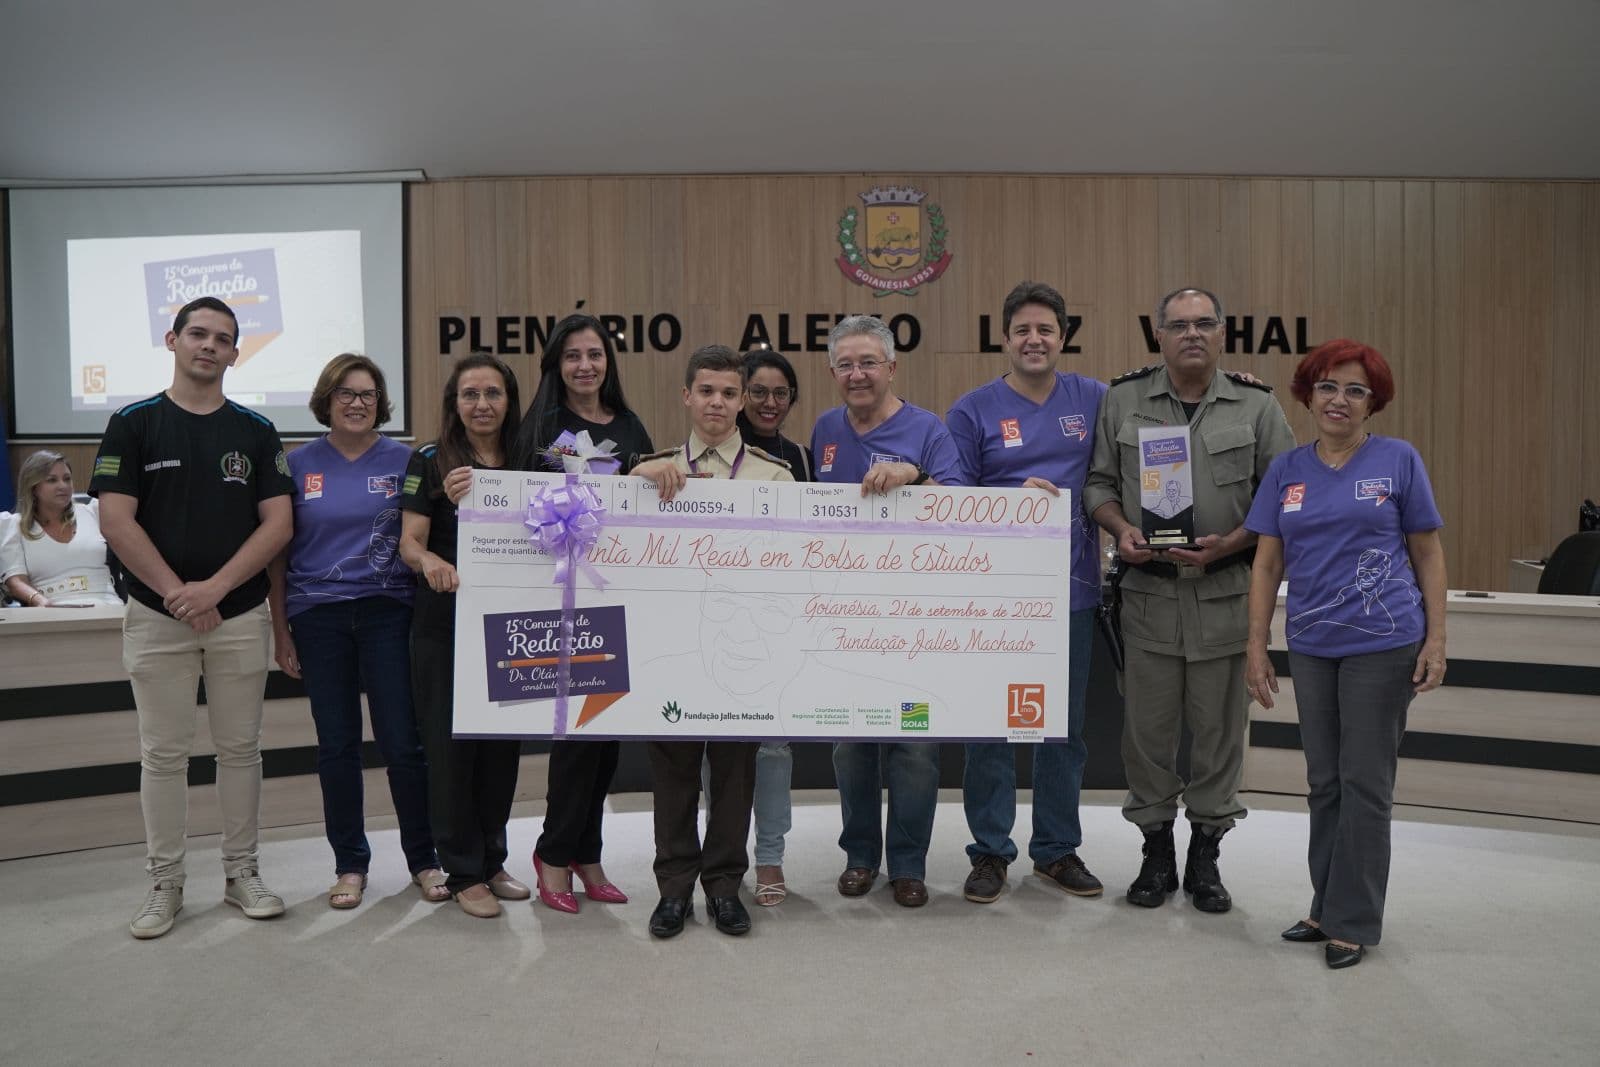 Jalles Machado Foundation awards winners of the Dr. Otávio essay contest